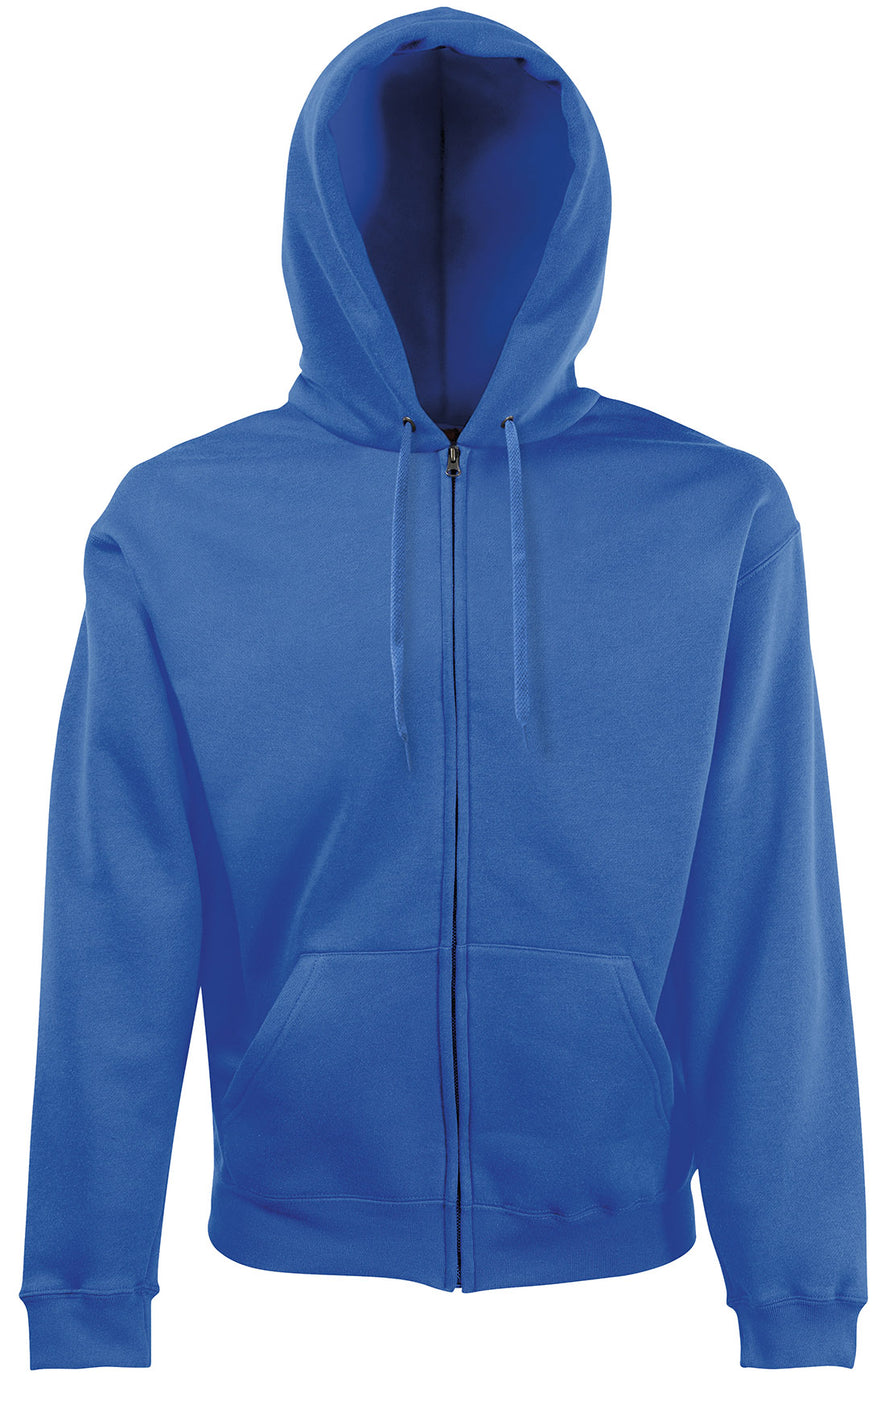 Premium 70/30 hooded sweatshirt jacket